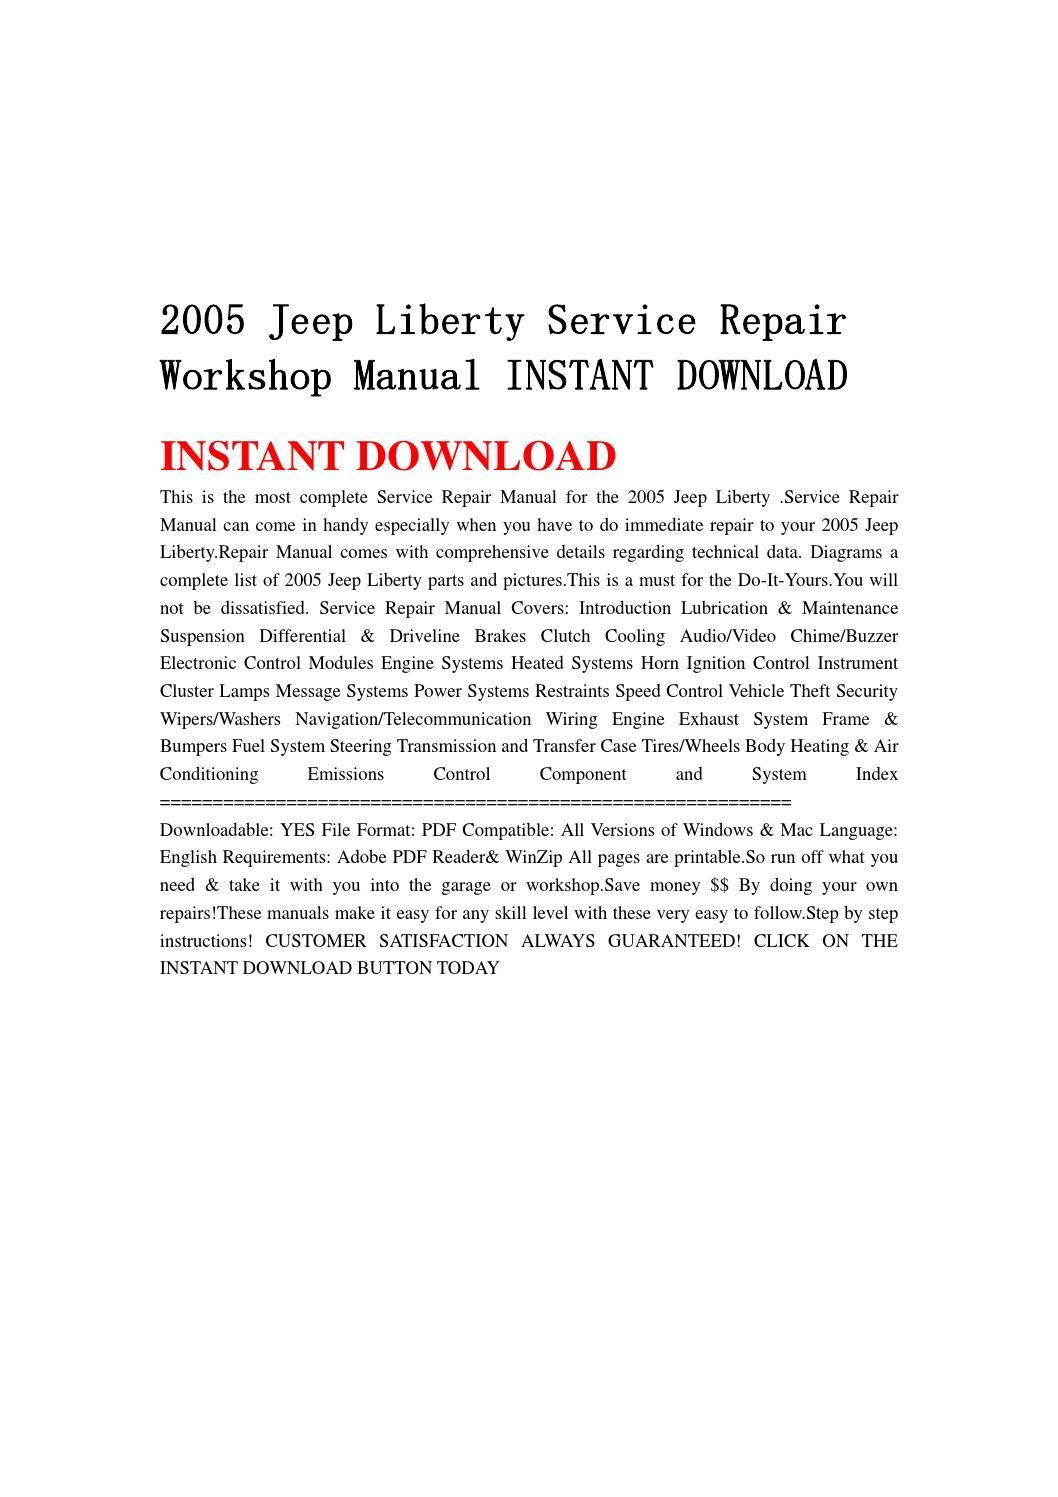 2005 Jeep Liberty Service Manual Download